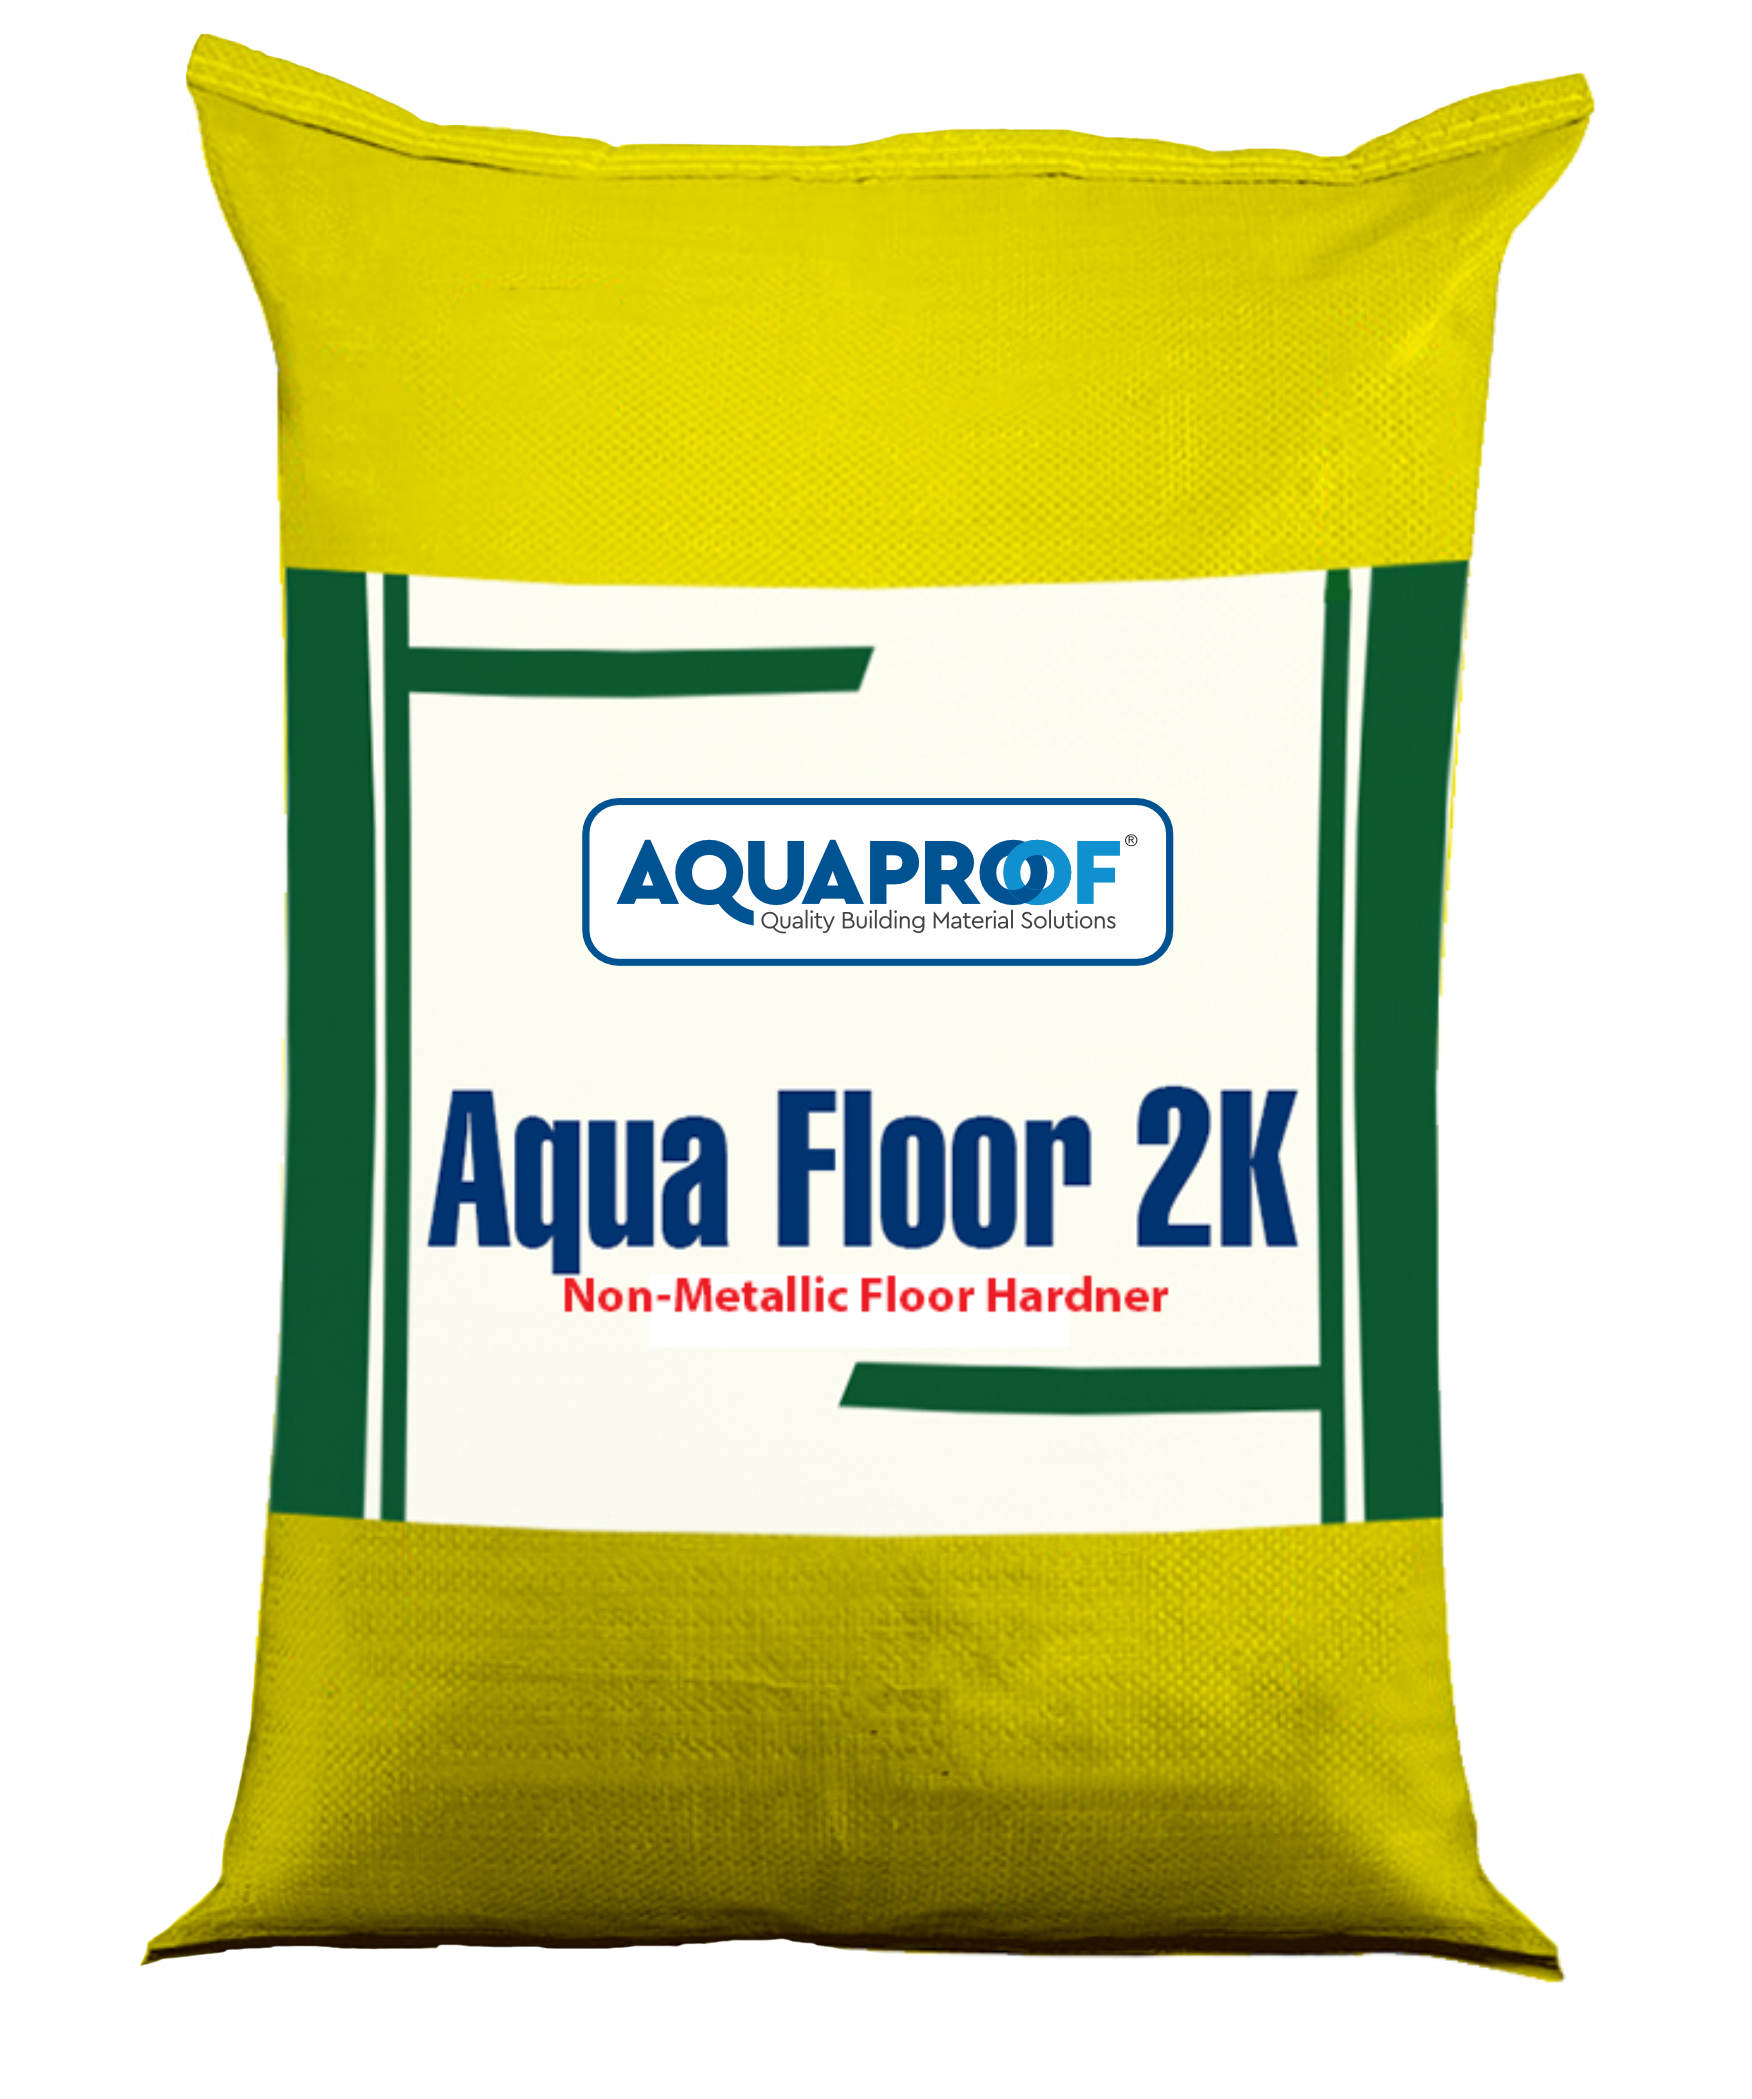 Aquafloor 2K